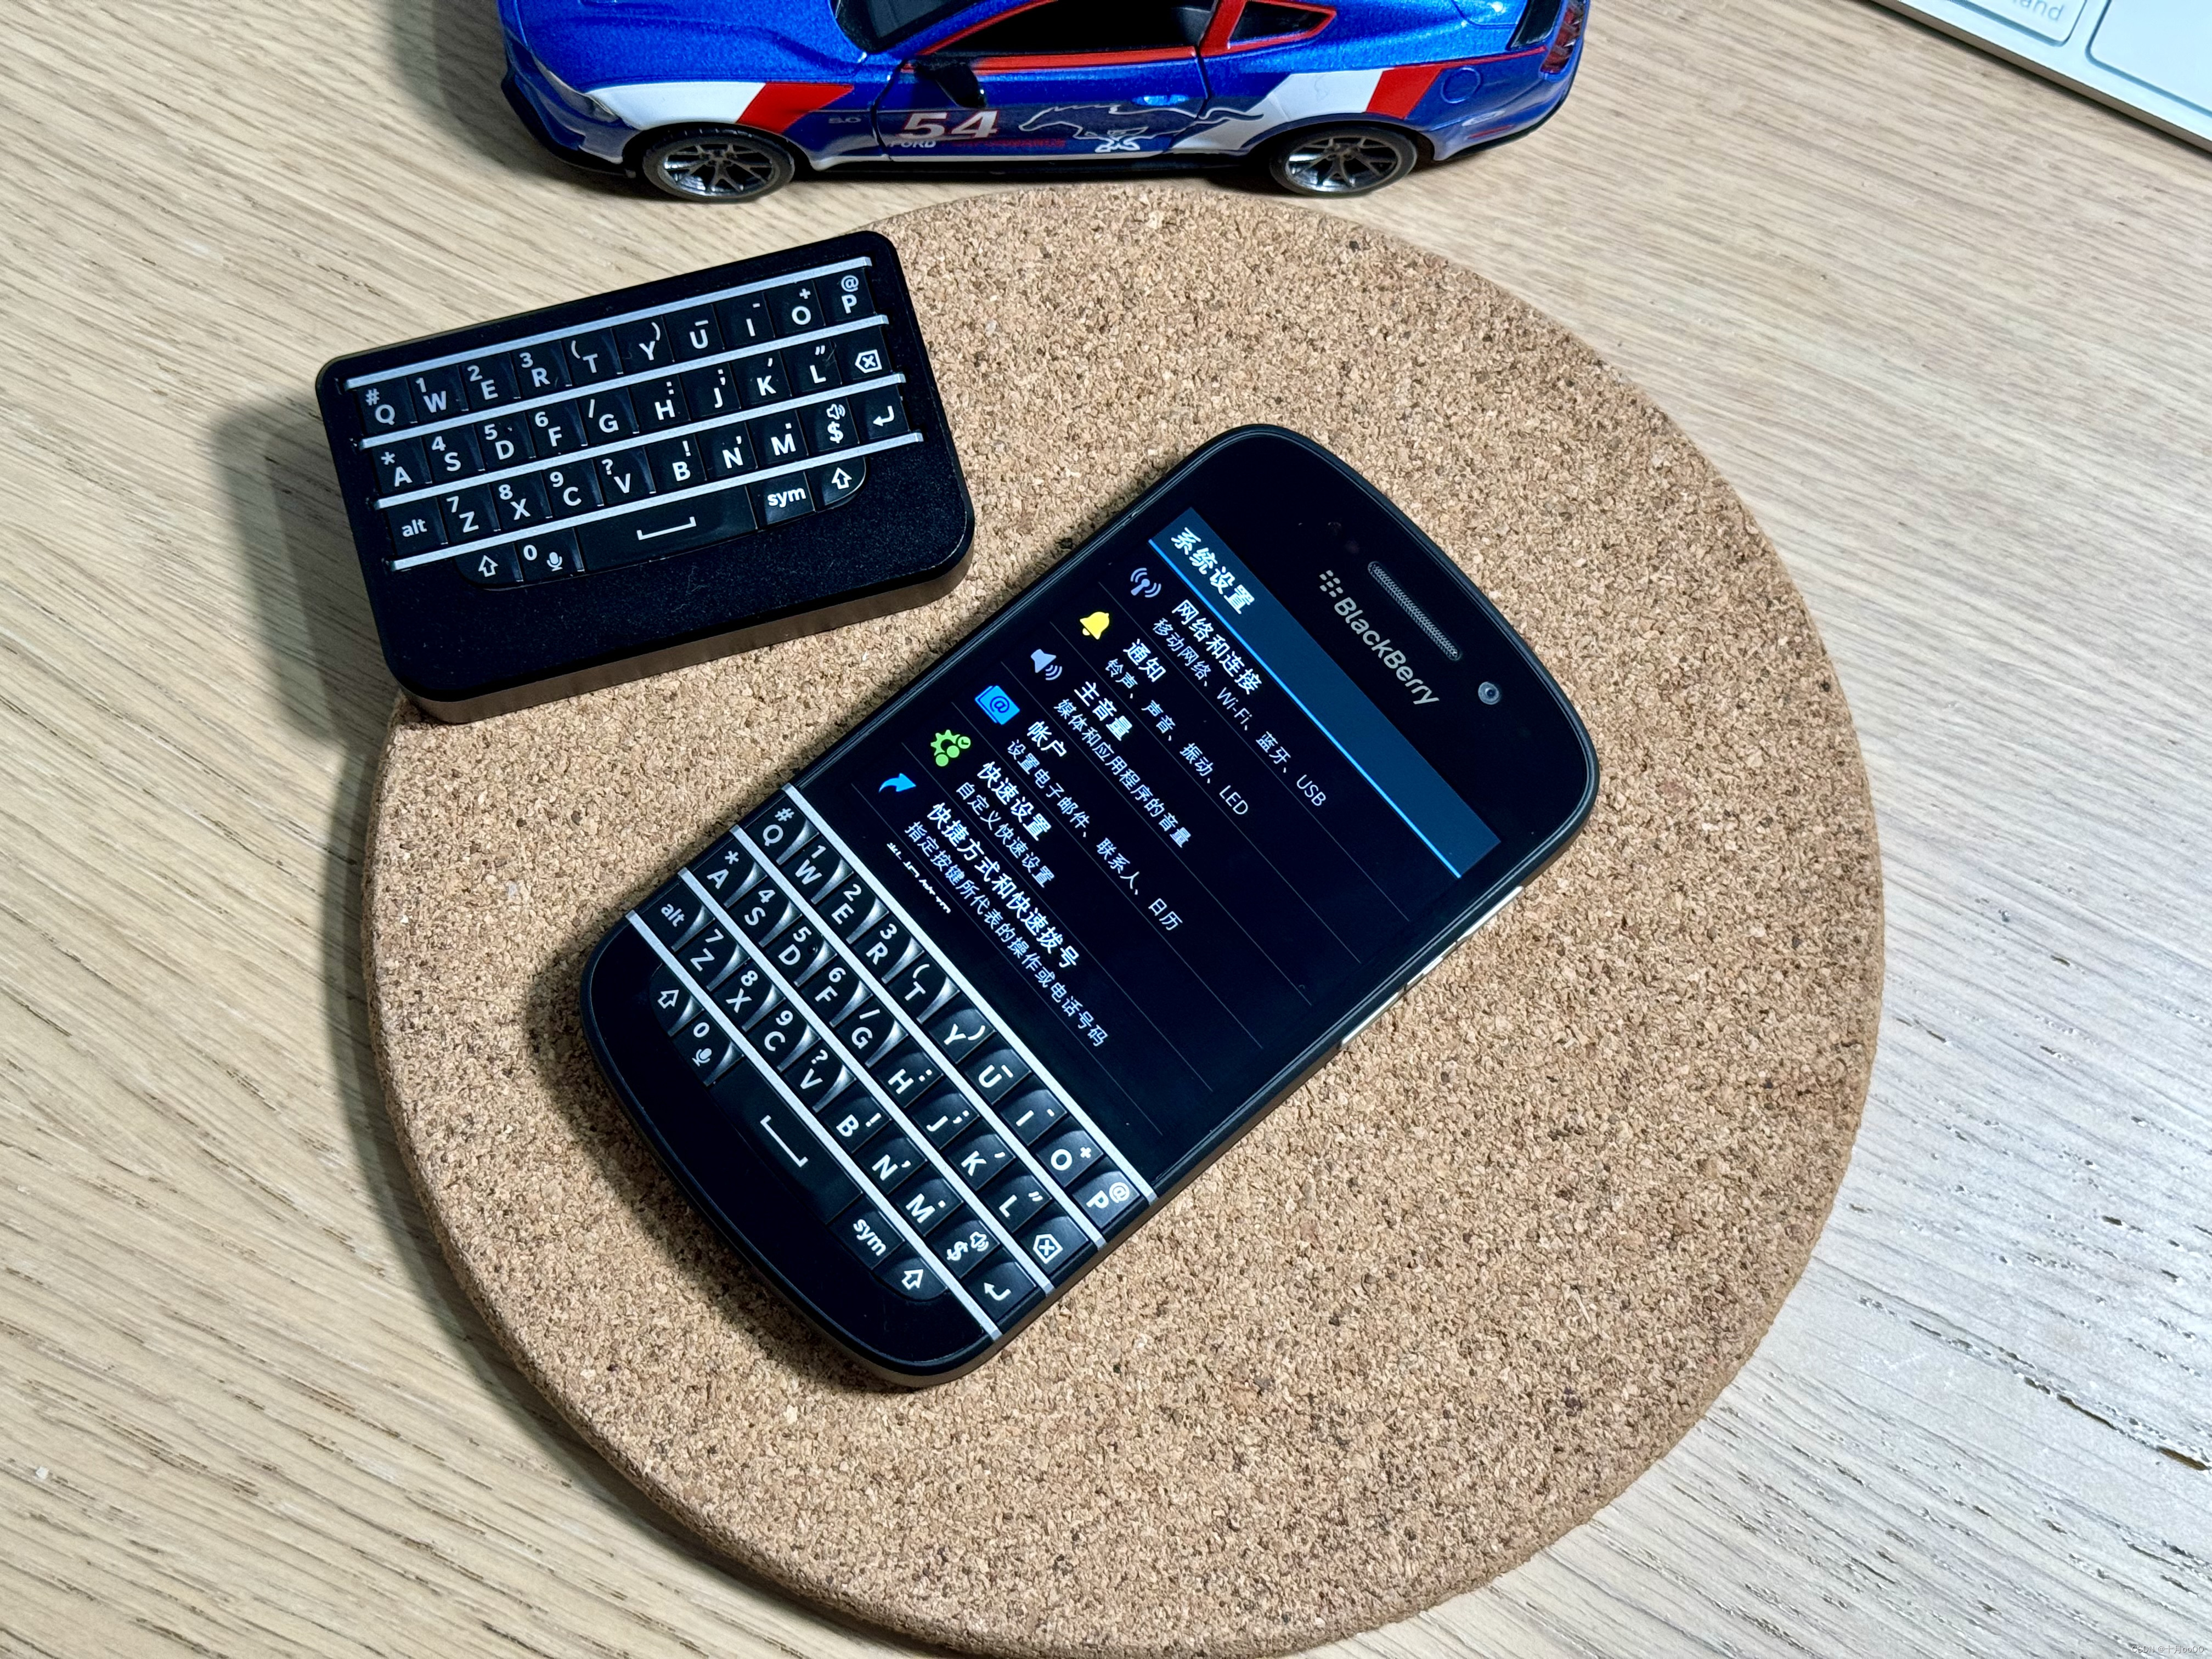 BlackberryQ10 是可以安装 Android 4.3 应用的